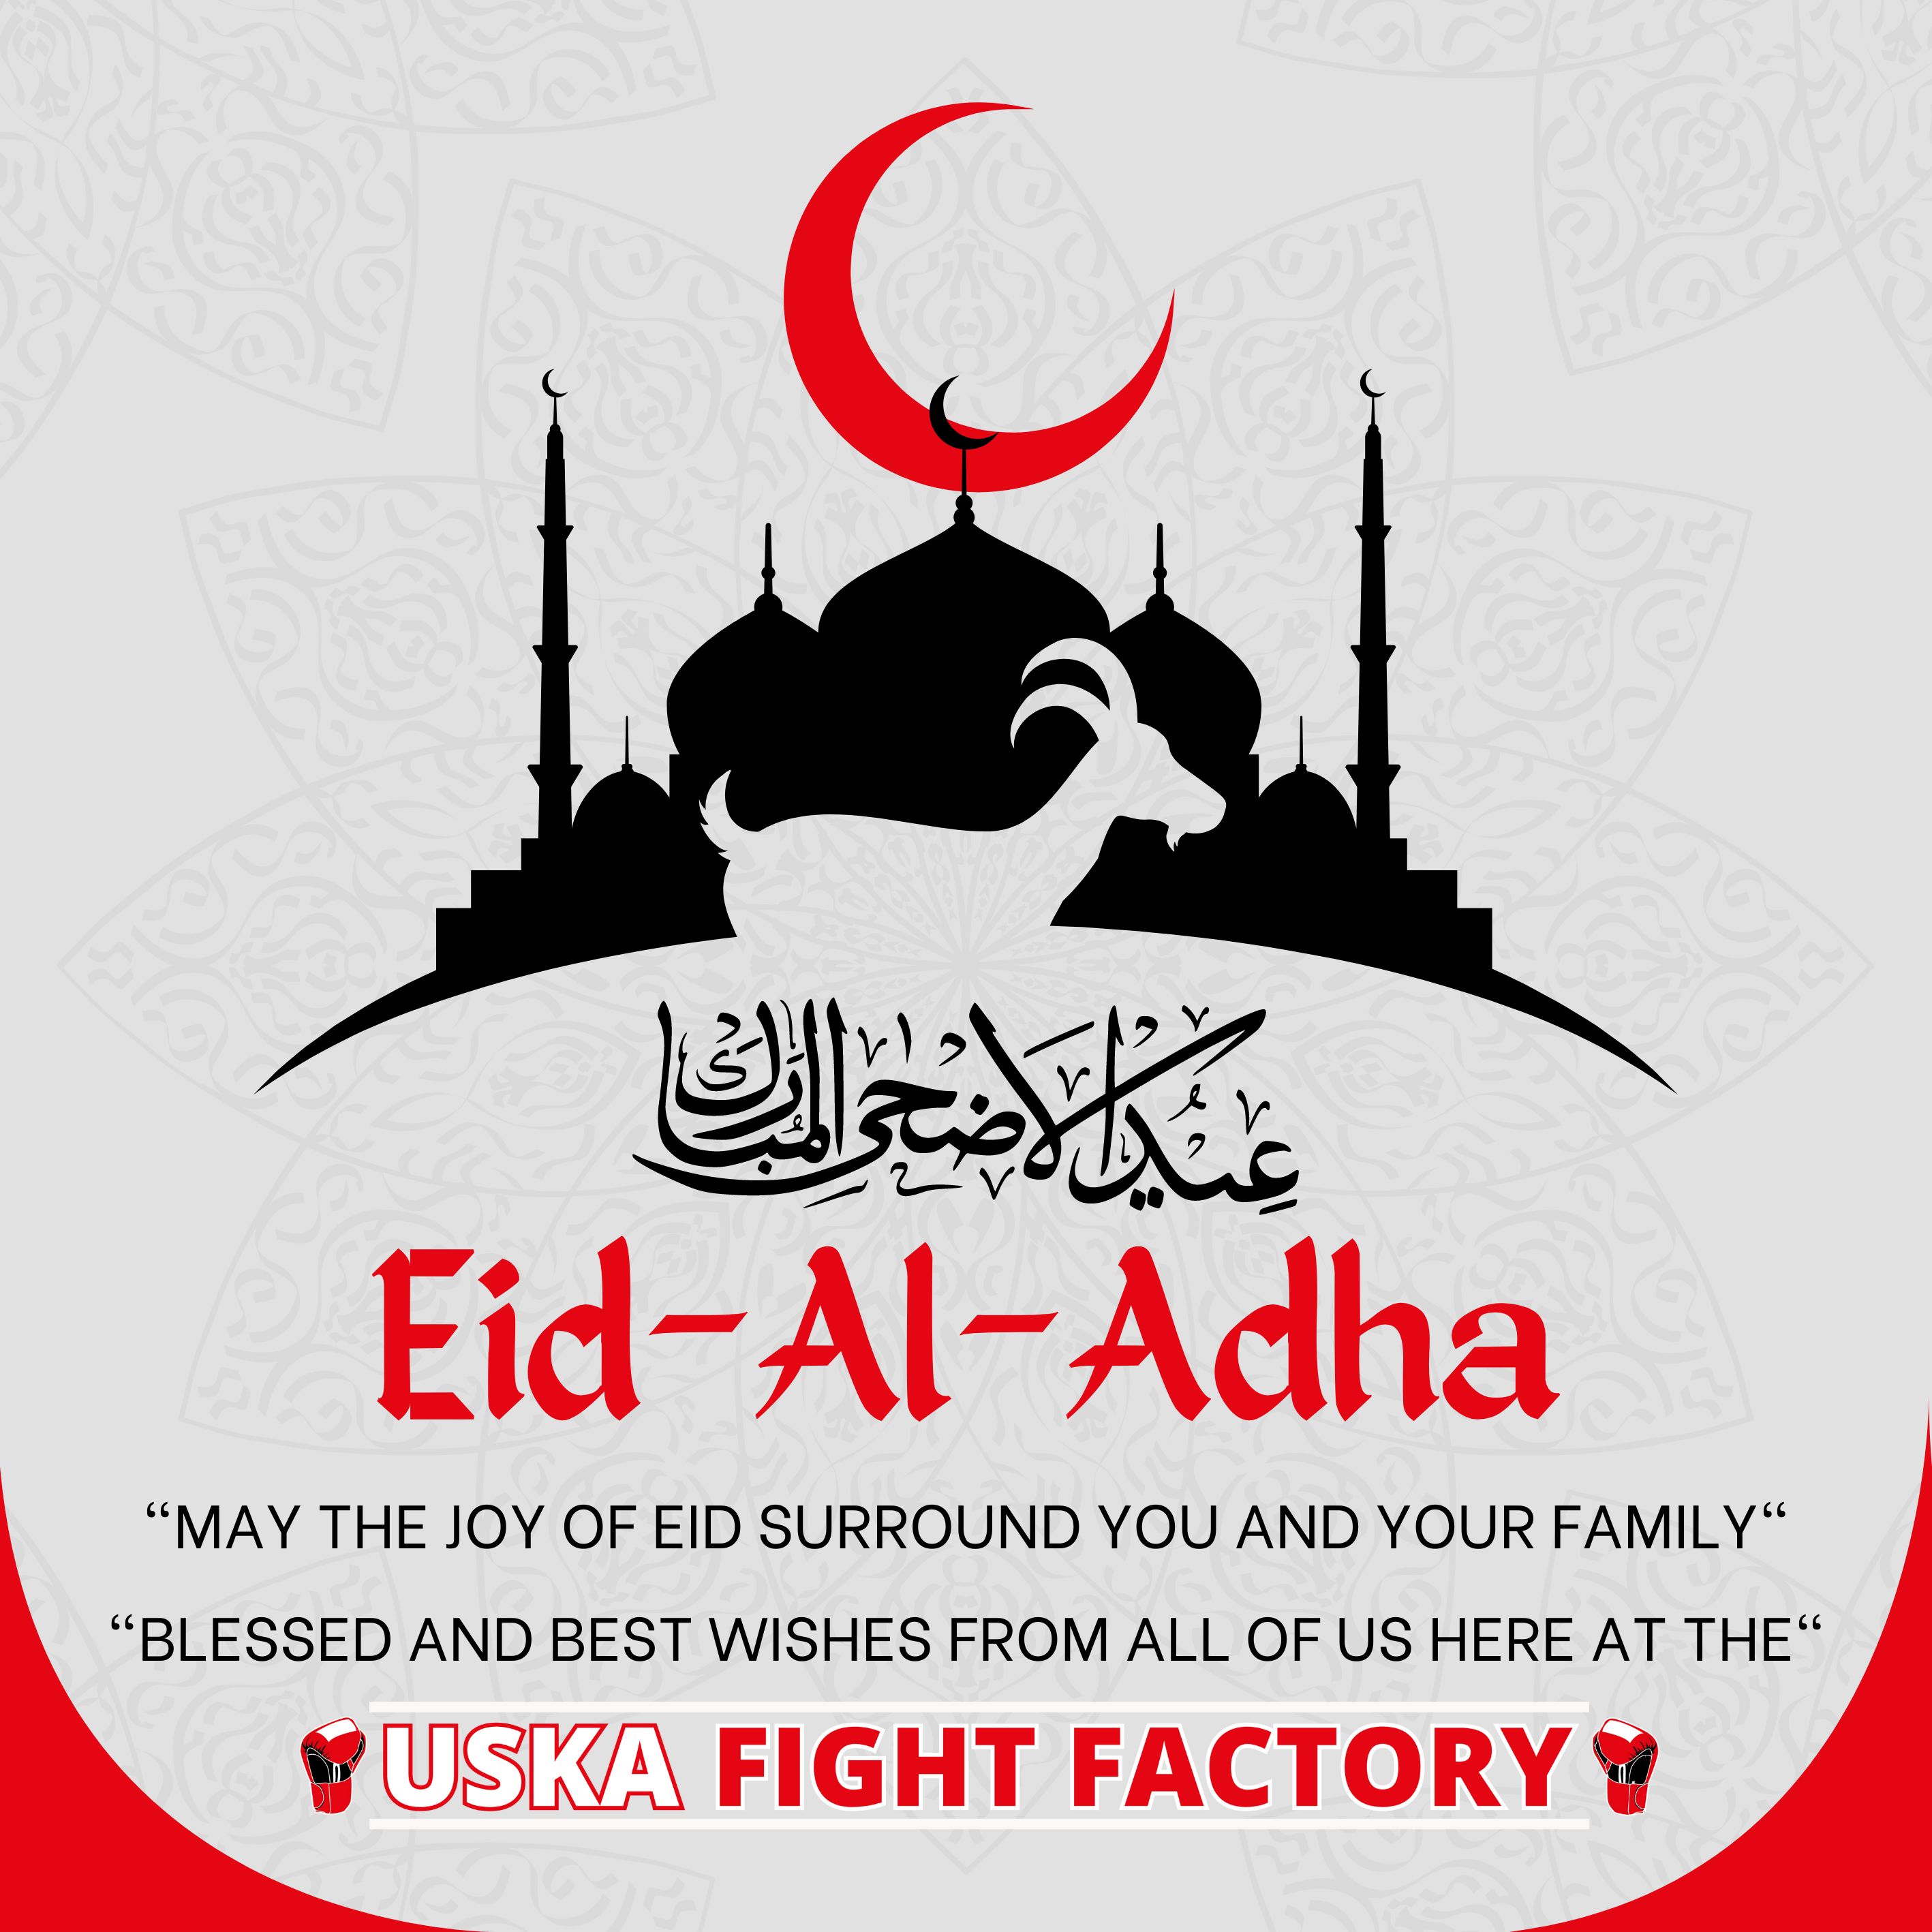 28-06-23 - Eid Al-Adha Mubarak